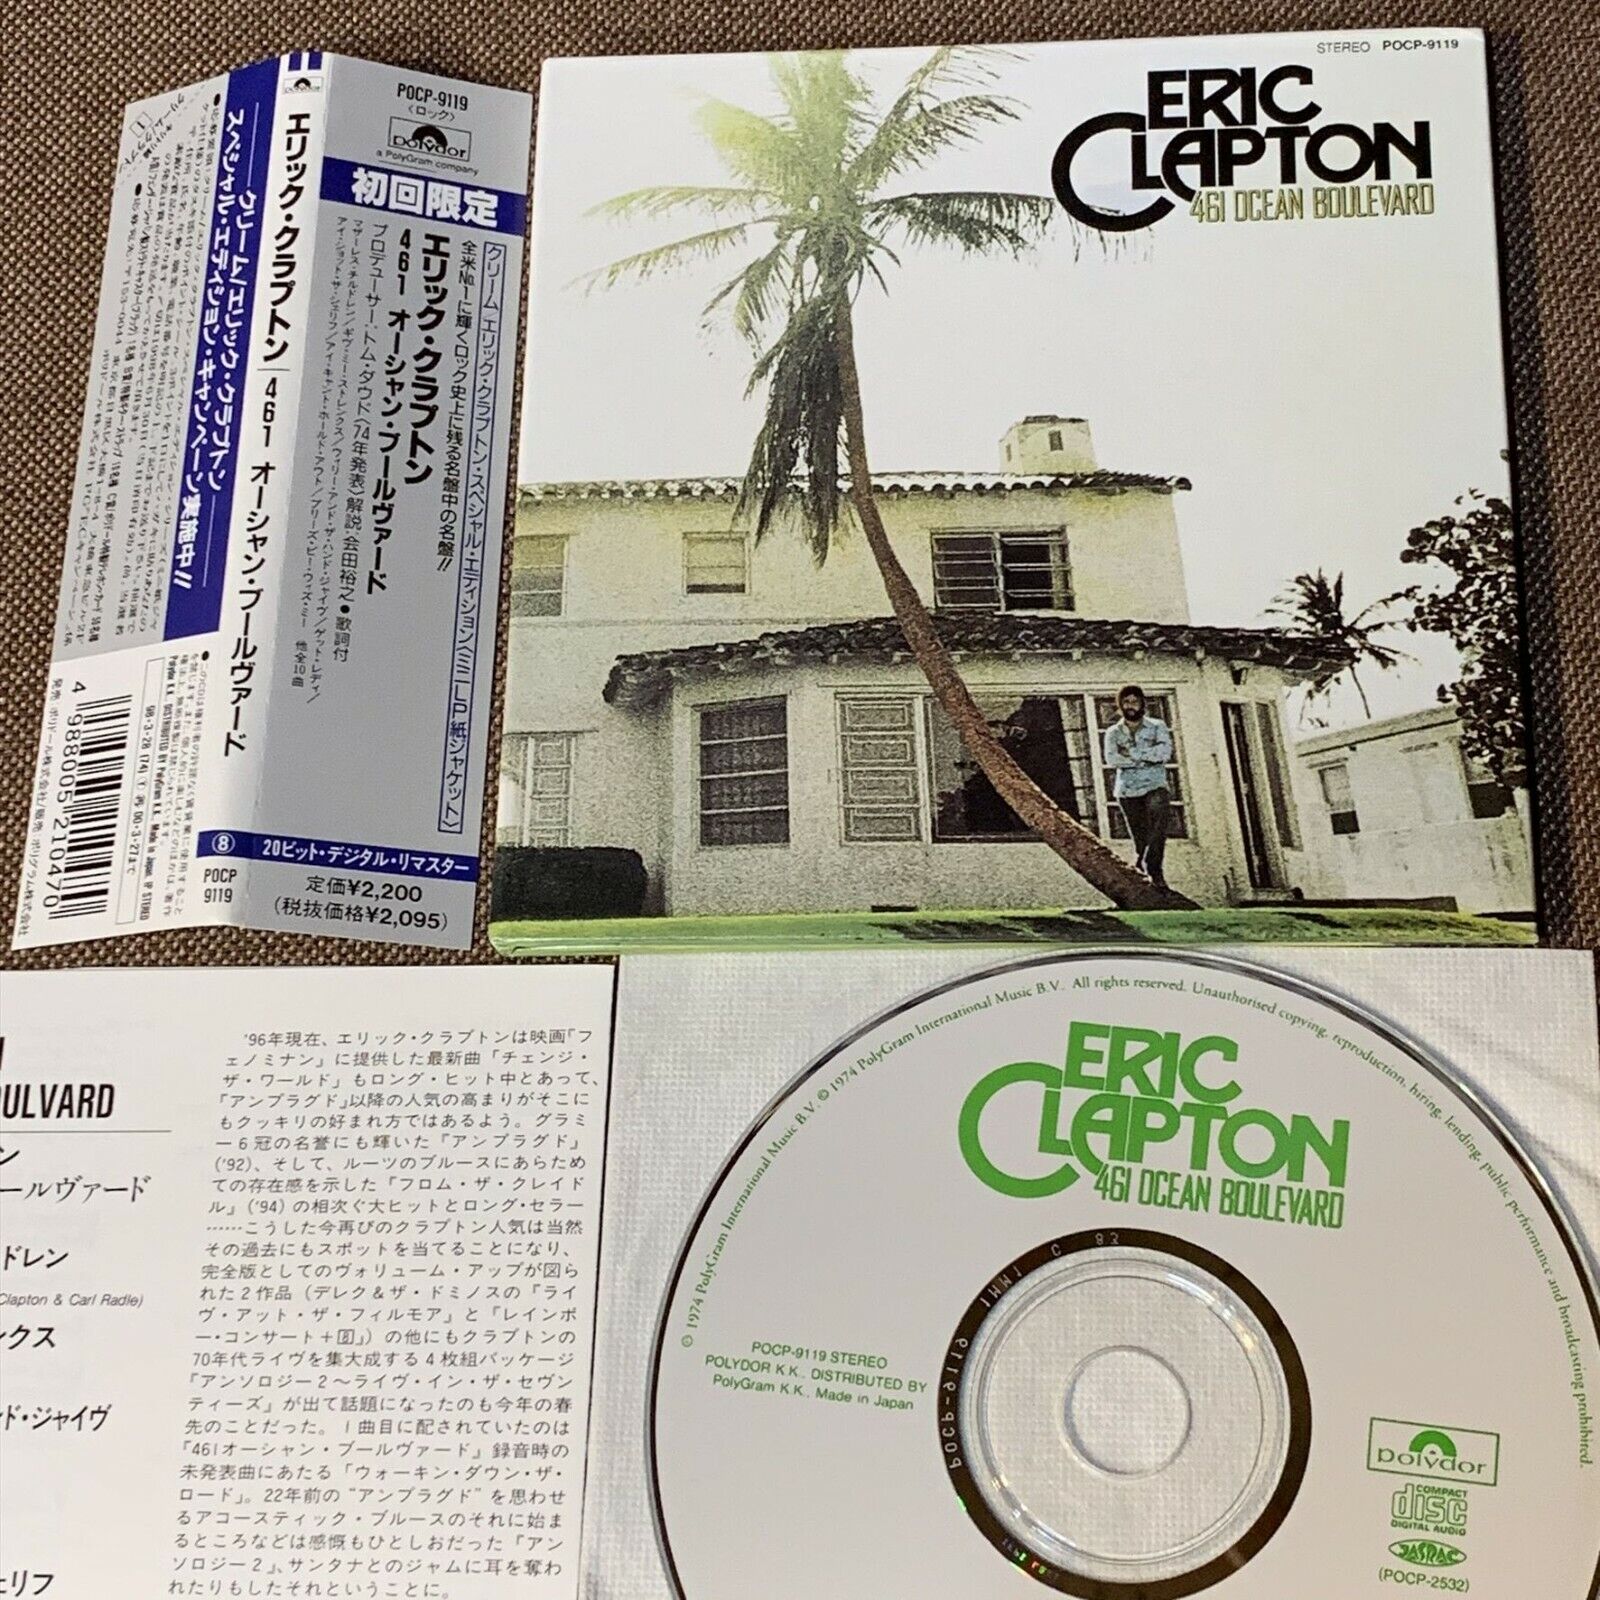 ERIC CLAPTON 461 Ocean Boulevard Mini-LP CD POCP-9119 w/OBI+INSERT 1998  issue